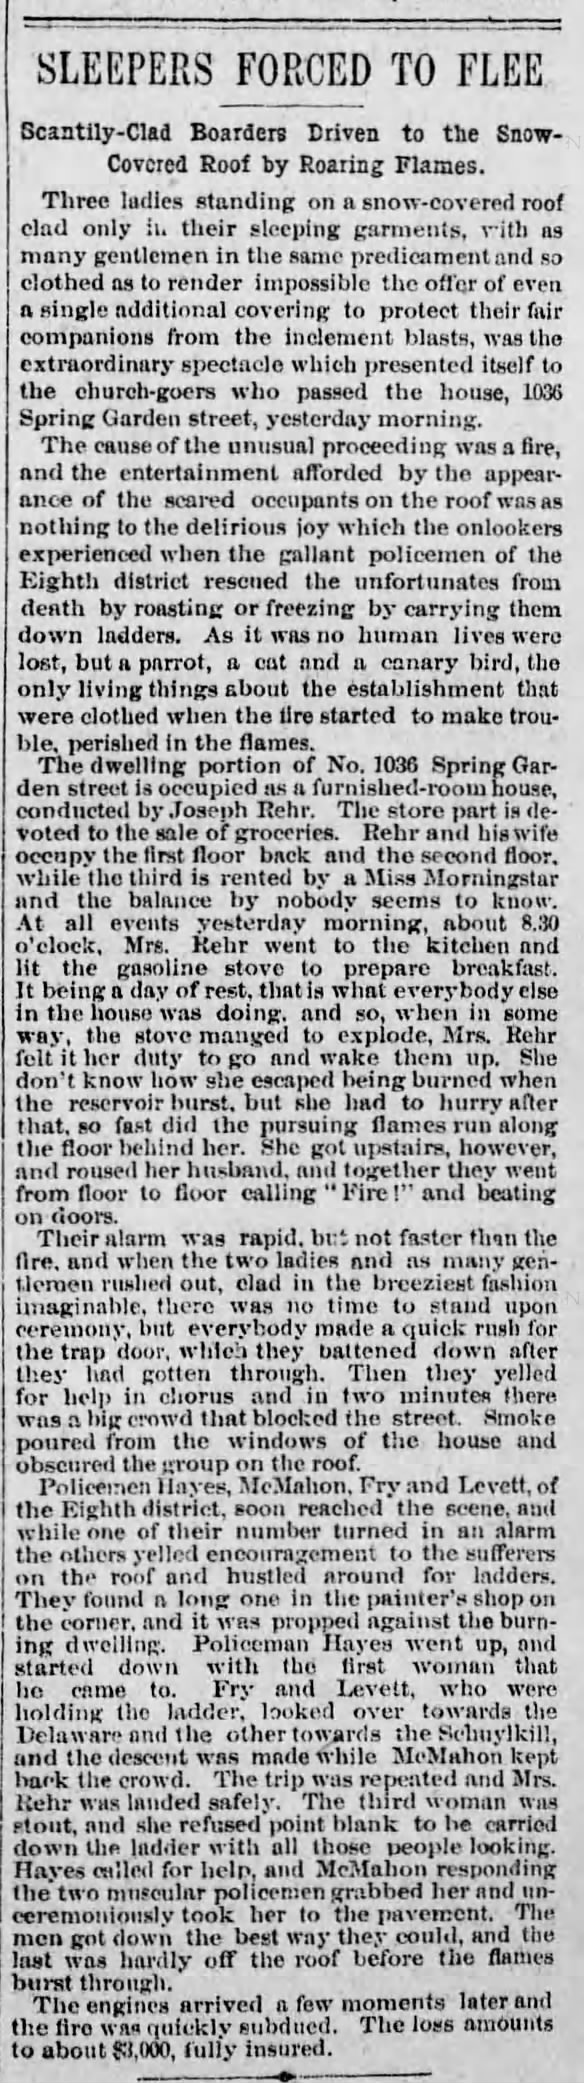 Rehr house  fire 1895